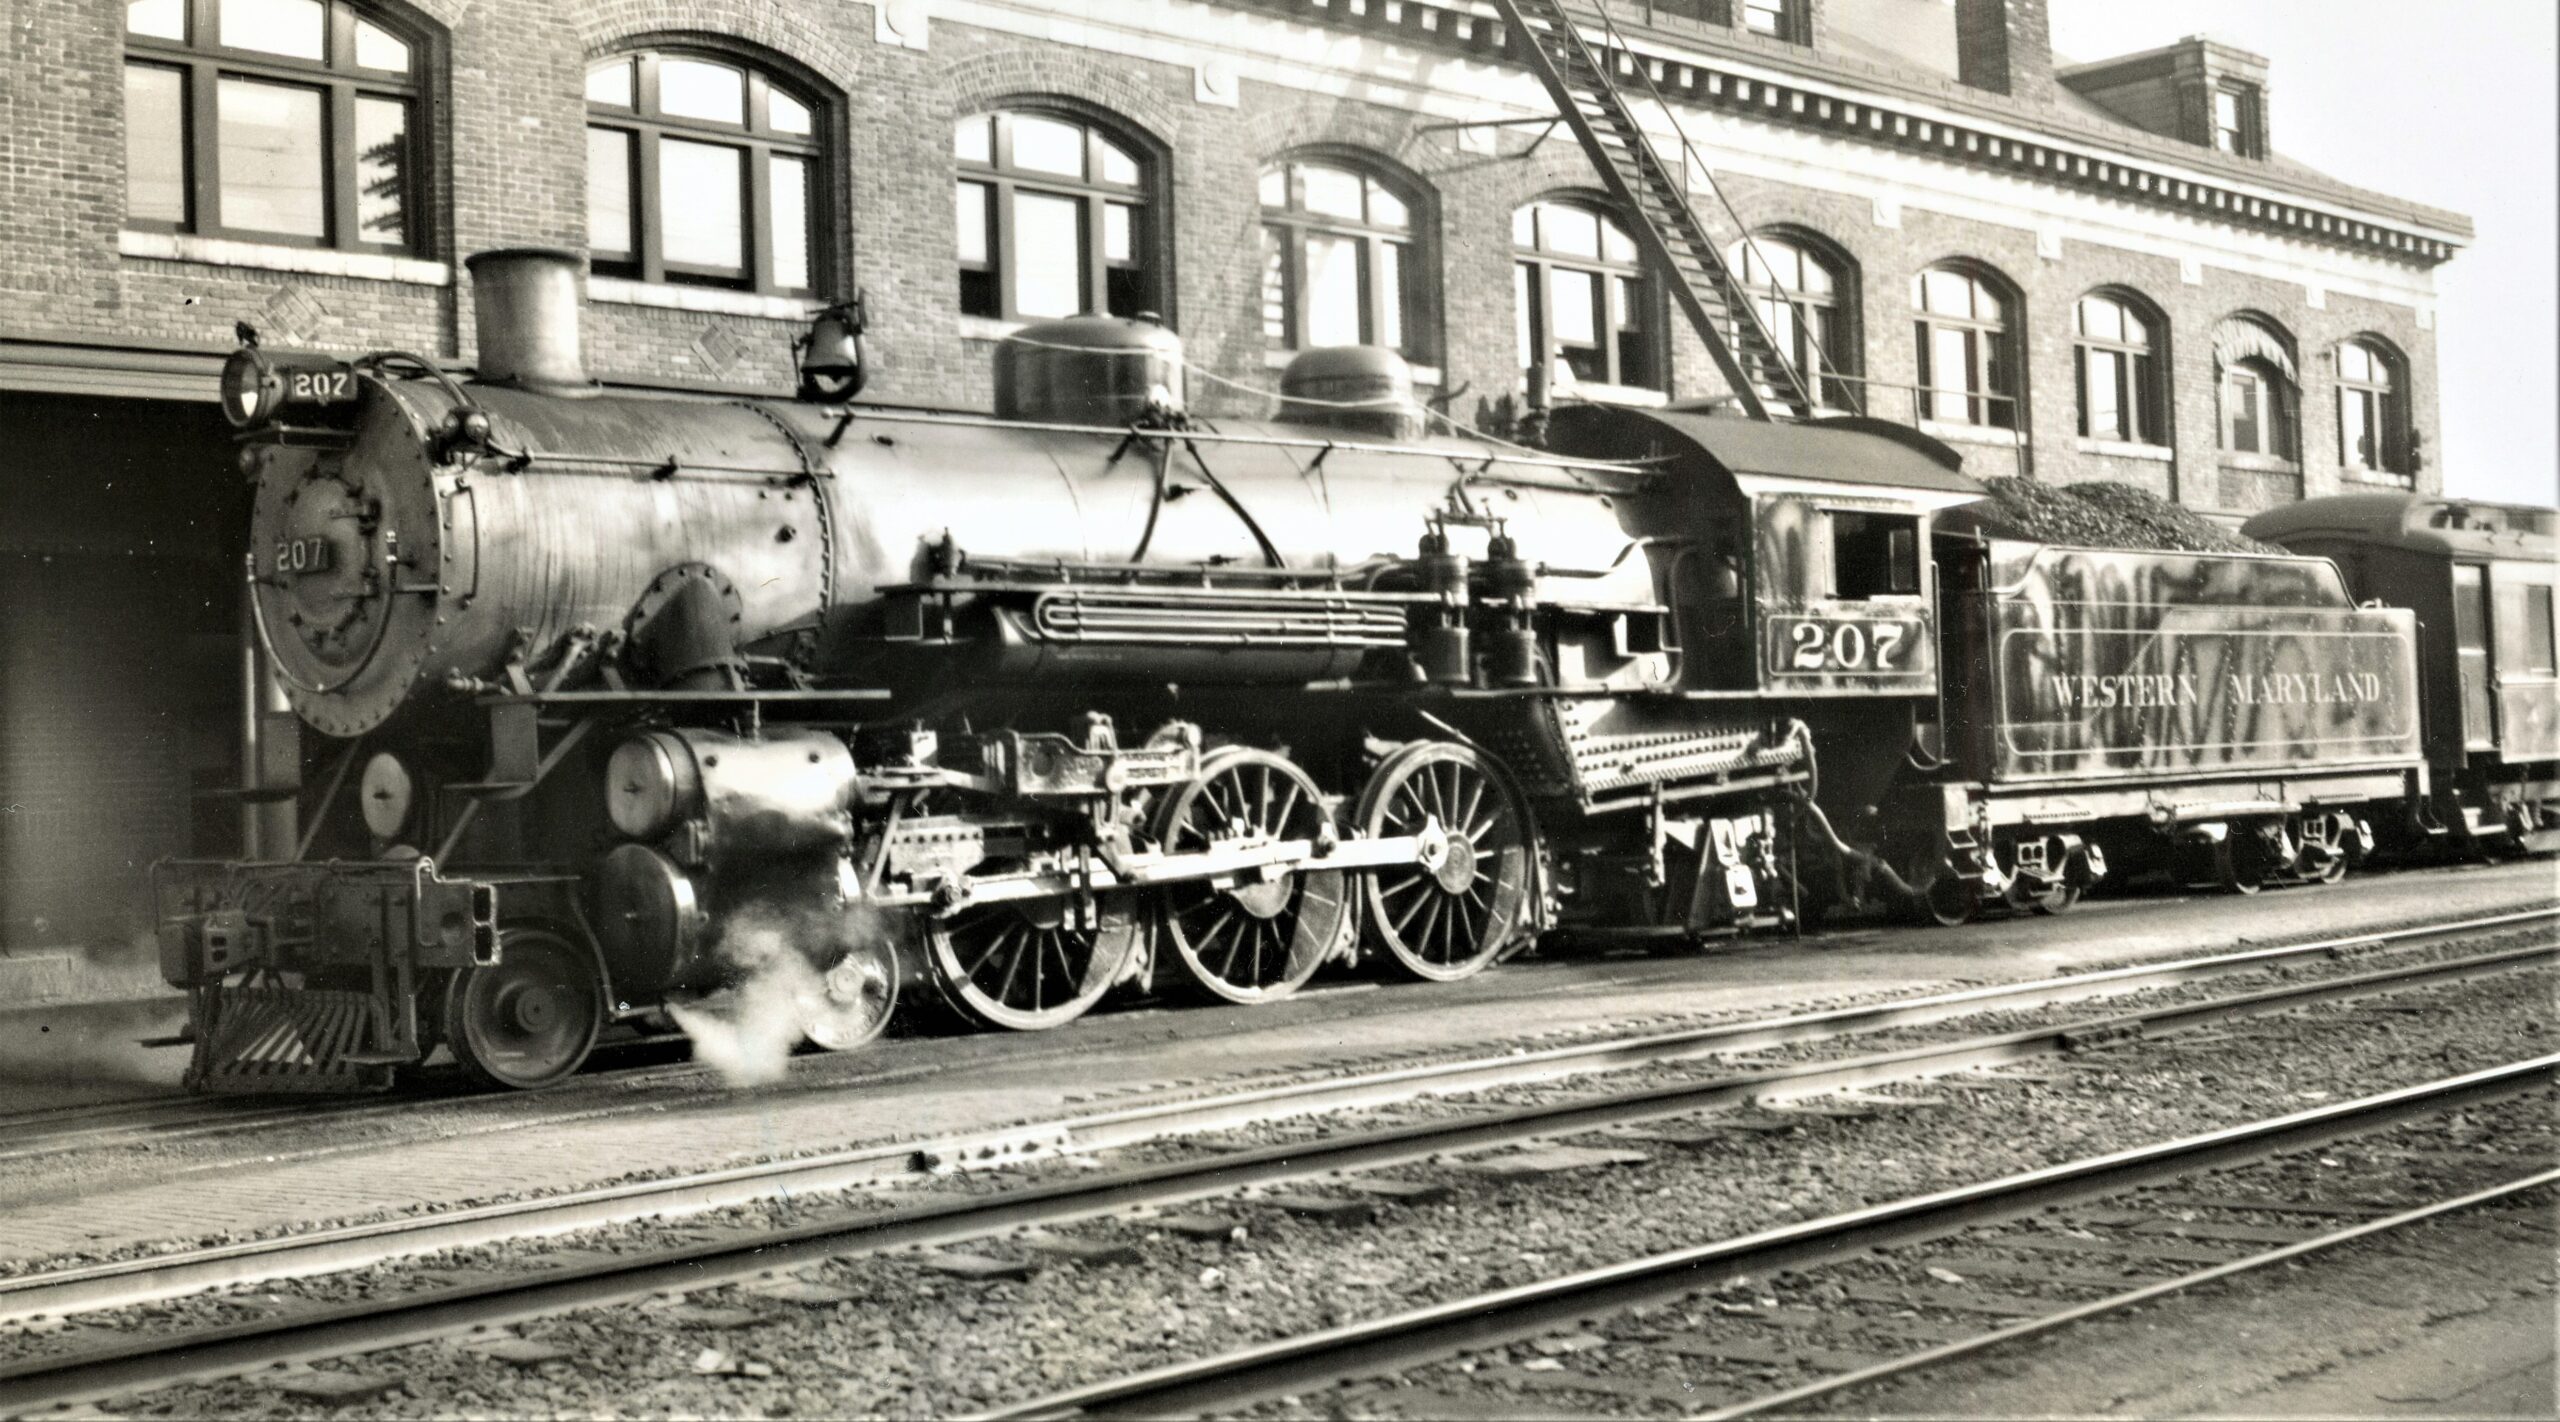 Western Maryland Railway | Hagerstown, Maryland | Class K2 4-6-2 #207 steam locomotive | Hagerstown Train Station | Train 4 | October 4, 1938